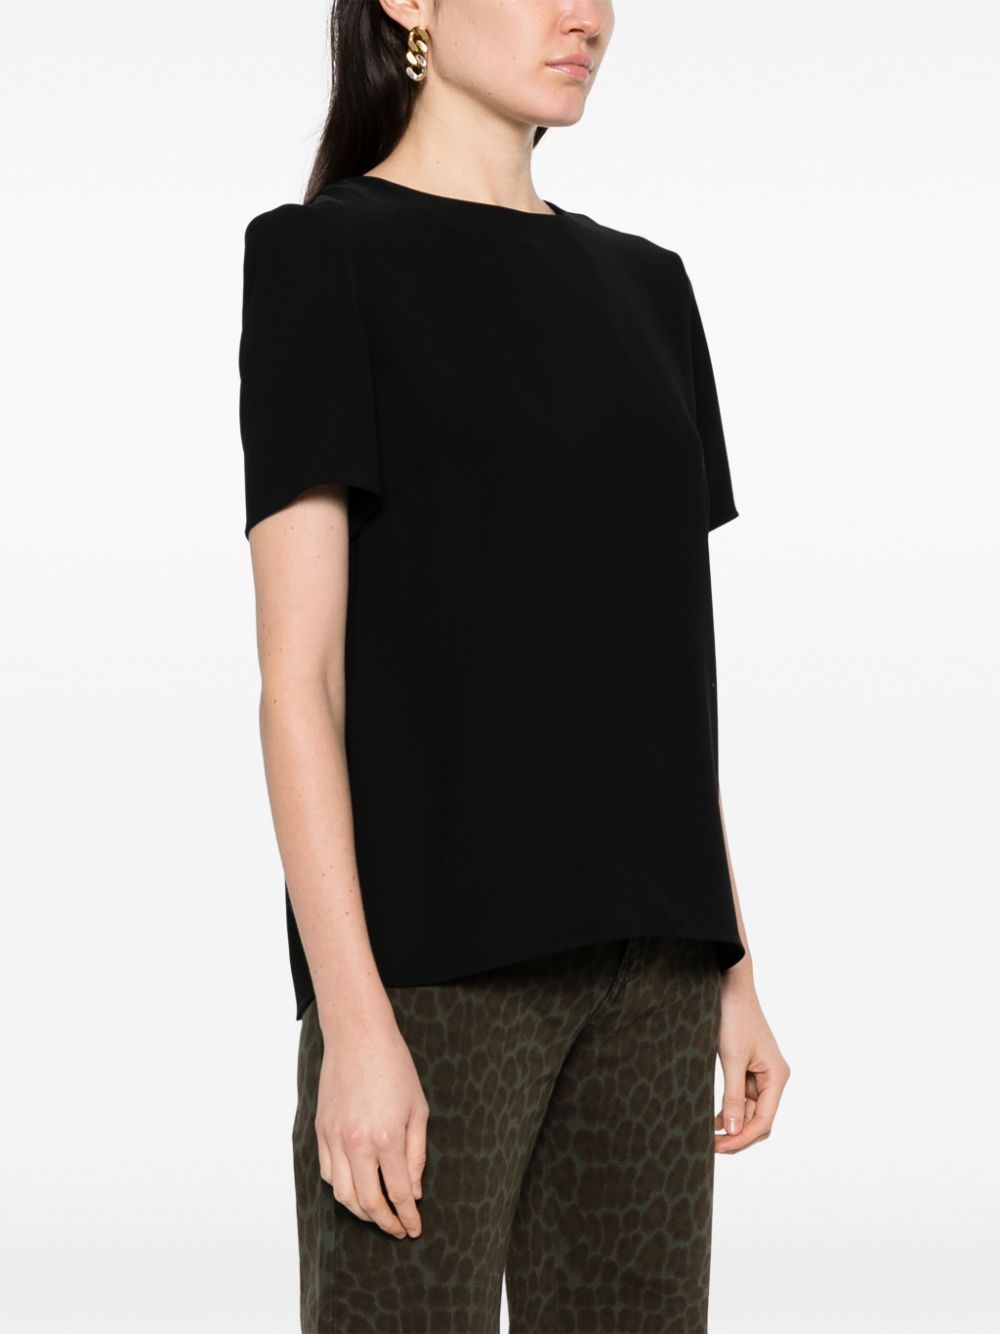 Black short-sleeve blouse